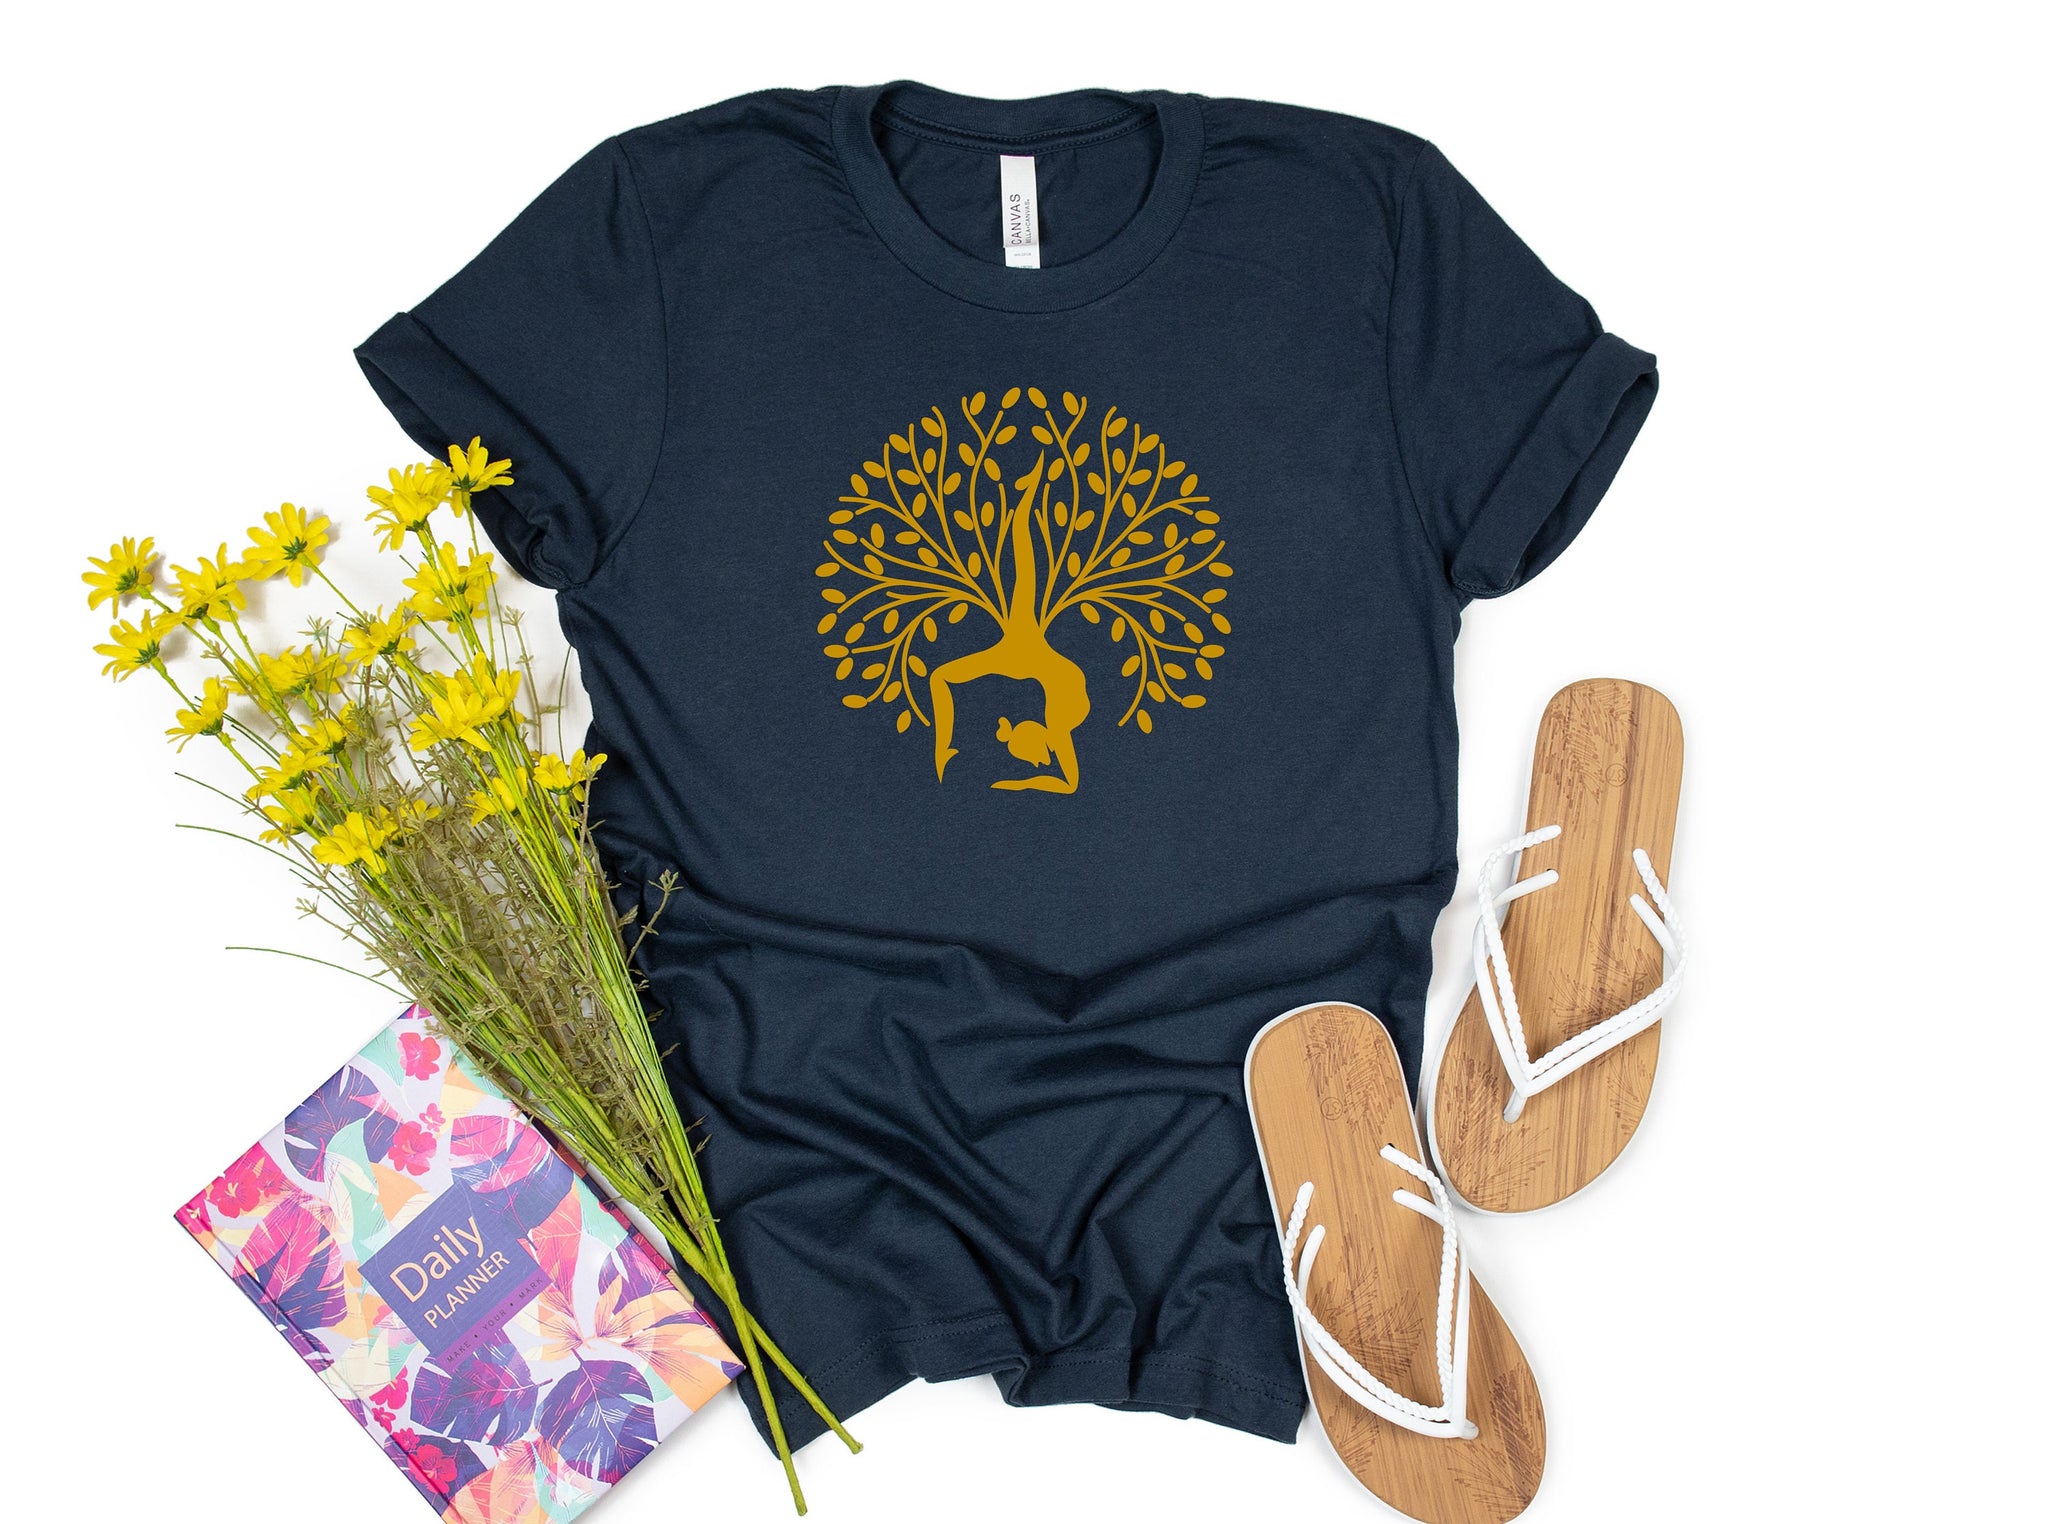 Yoga Silhouette Shirt, Chakras Yoga Cotton Shirts For Women, 7 Chakras Yoga Top, Gifts Yoga Teacher Student, Chakra Signs Shirt